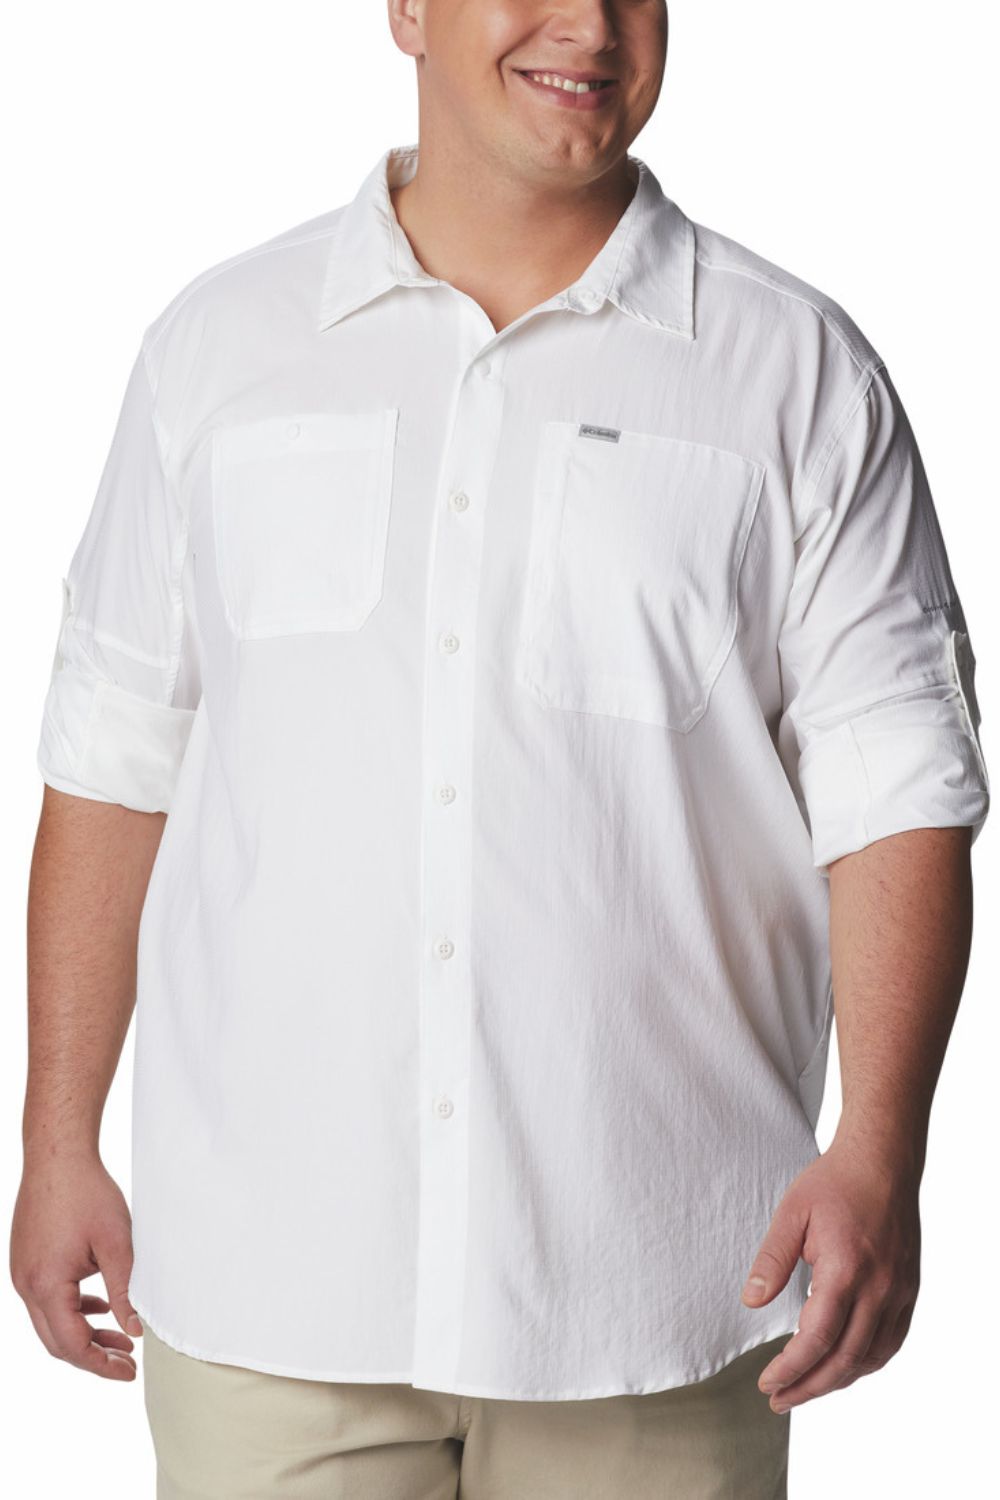 Men's Long Sleeves UV Shirt UPF 50+ for sun protection Columbia